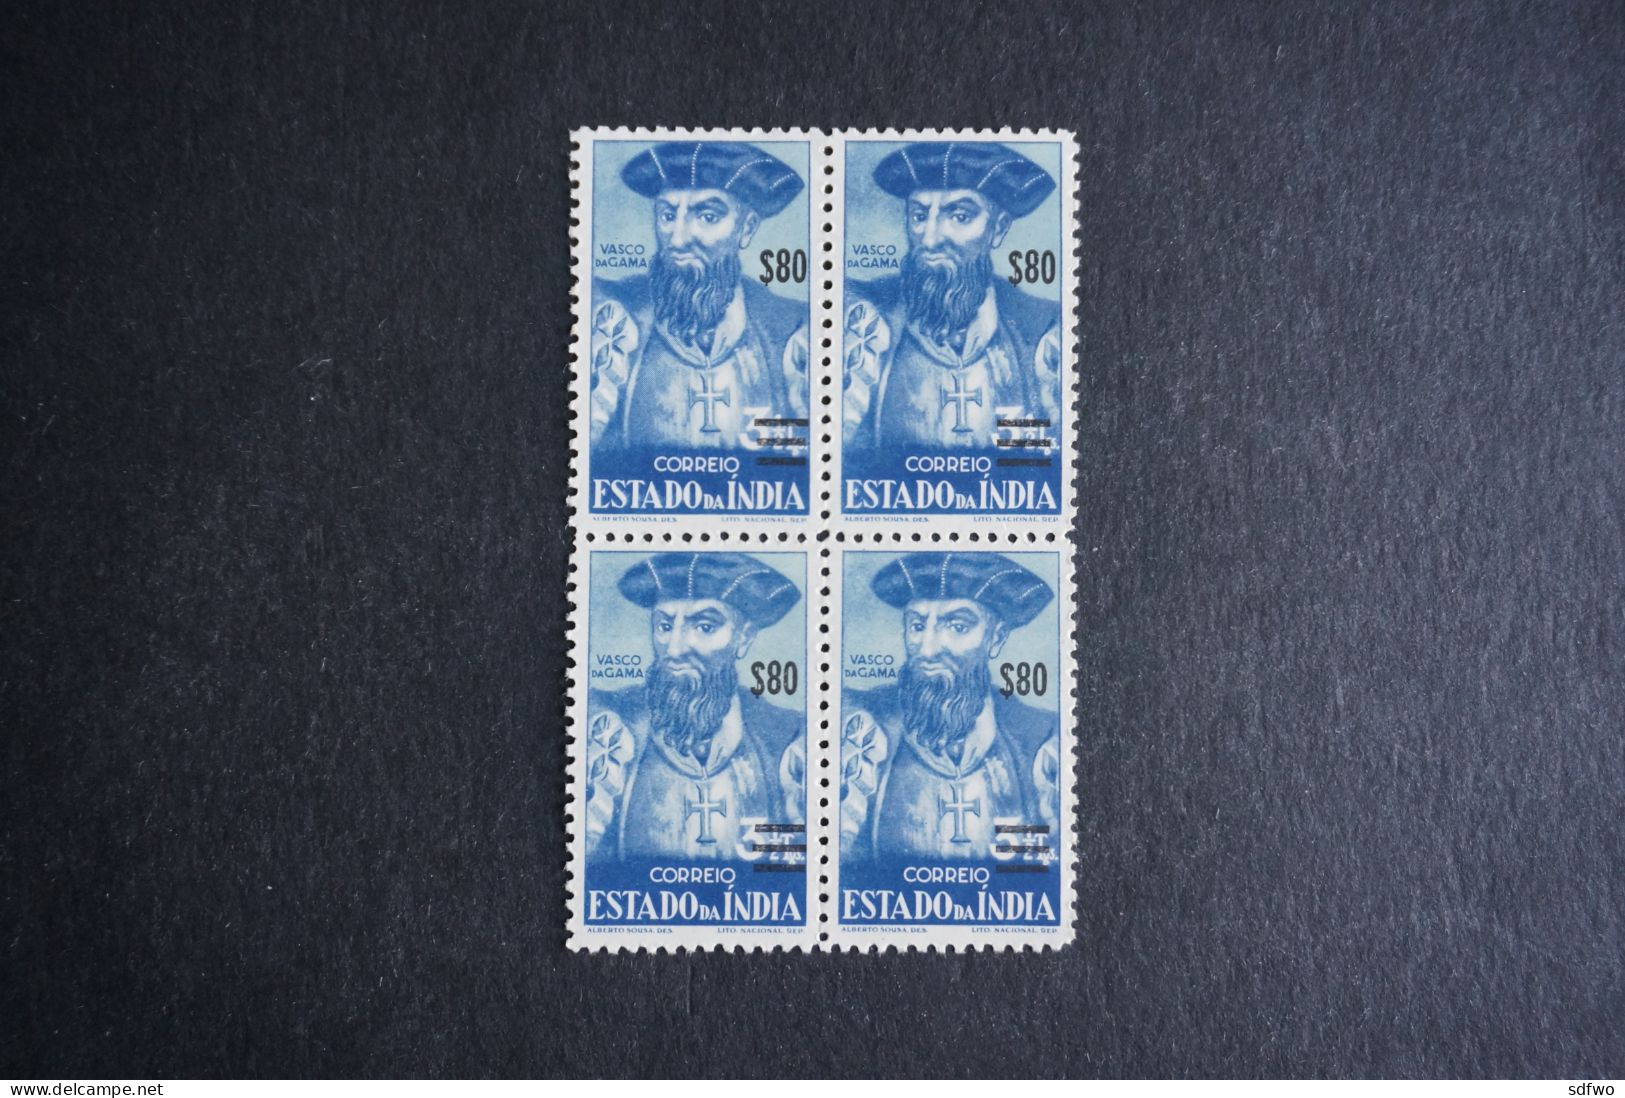 (G) Portuguese India 1959 Figures W/OVP $80 In Block Of 4 - MNH - India Portuguesa